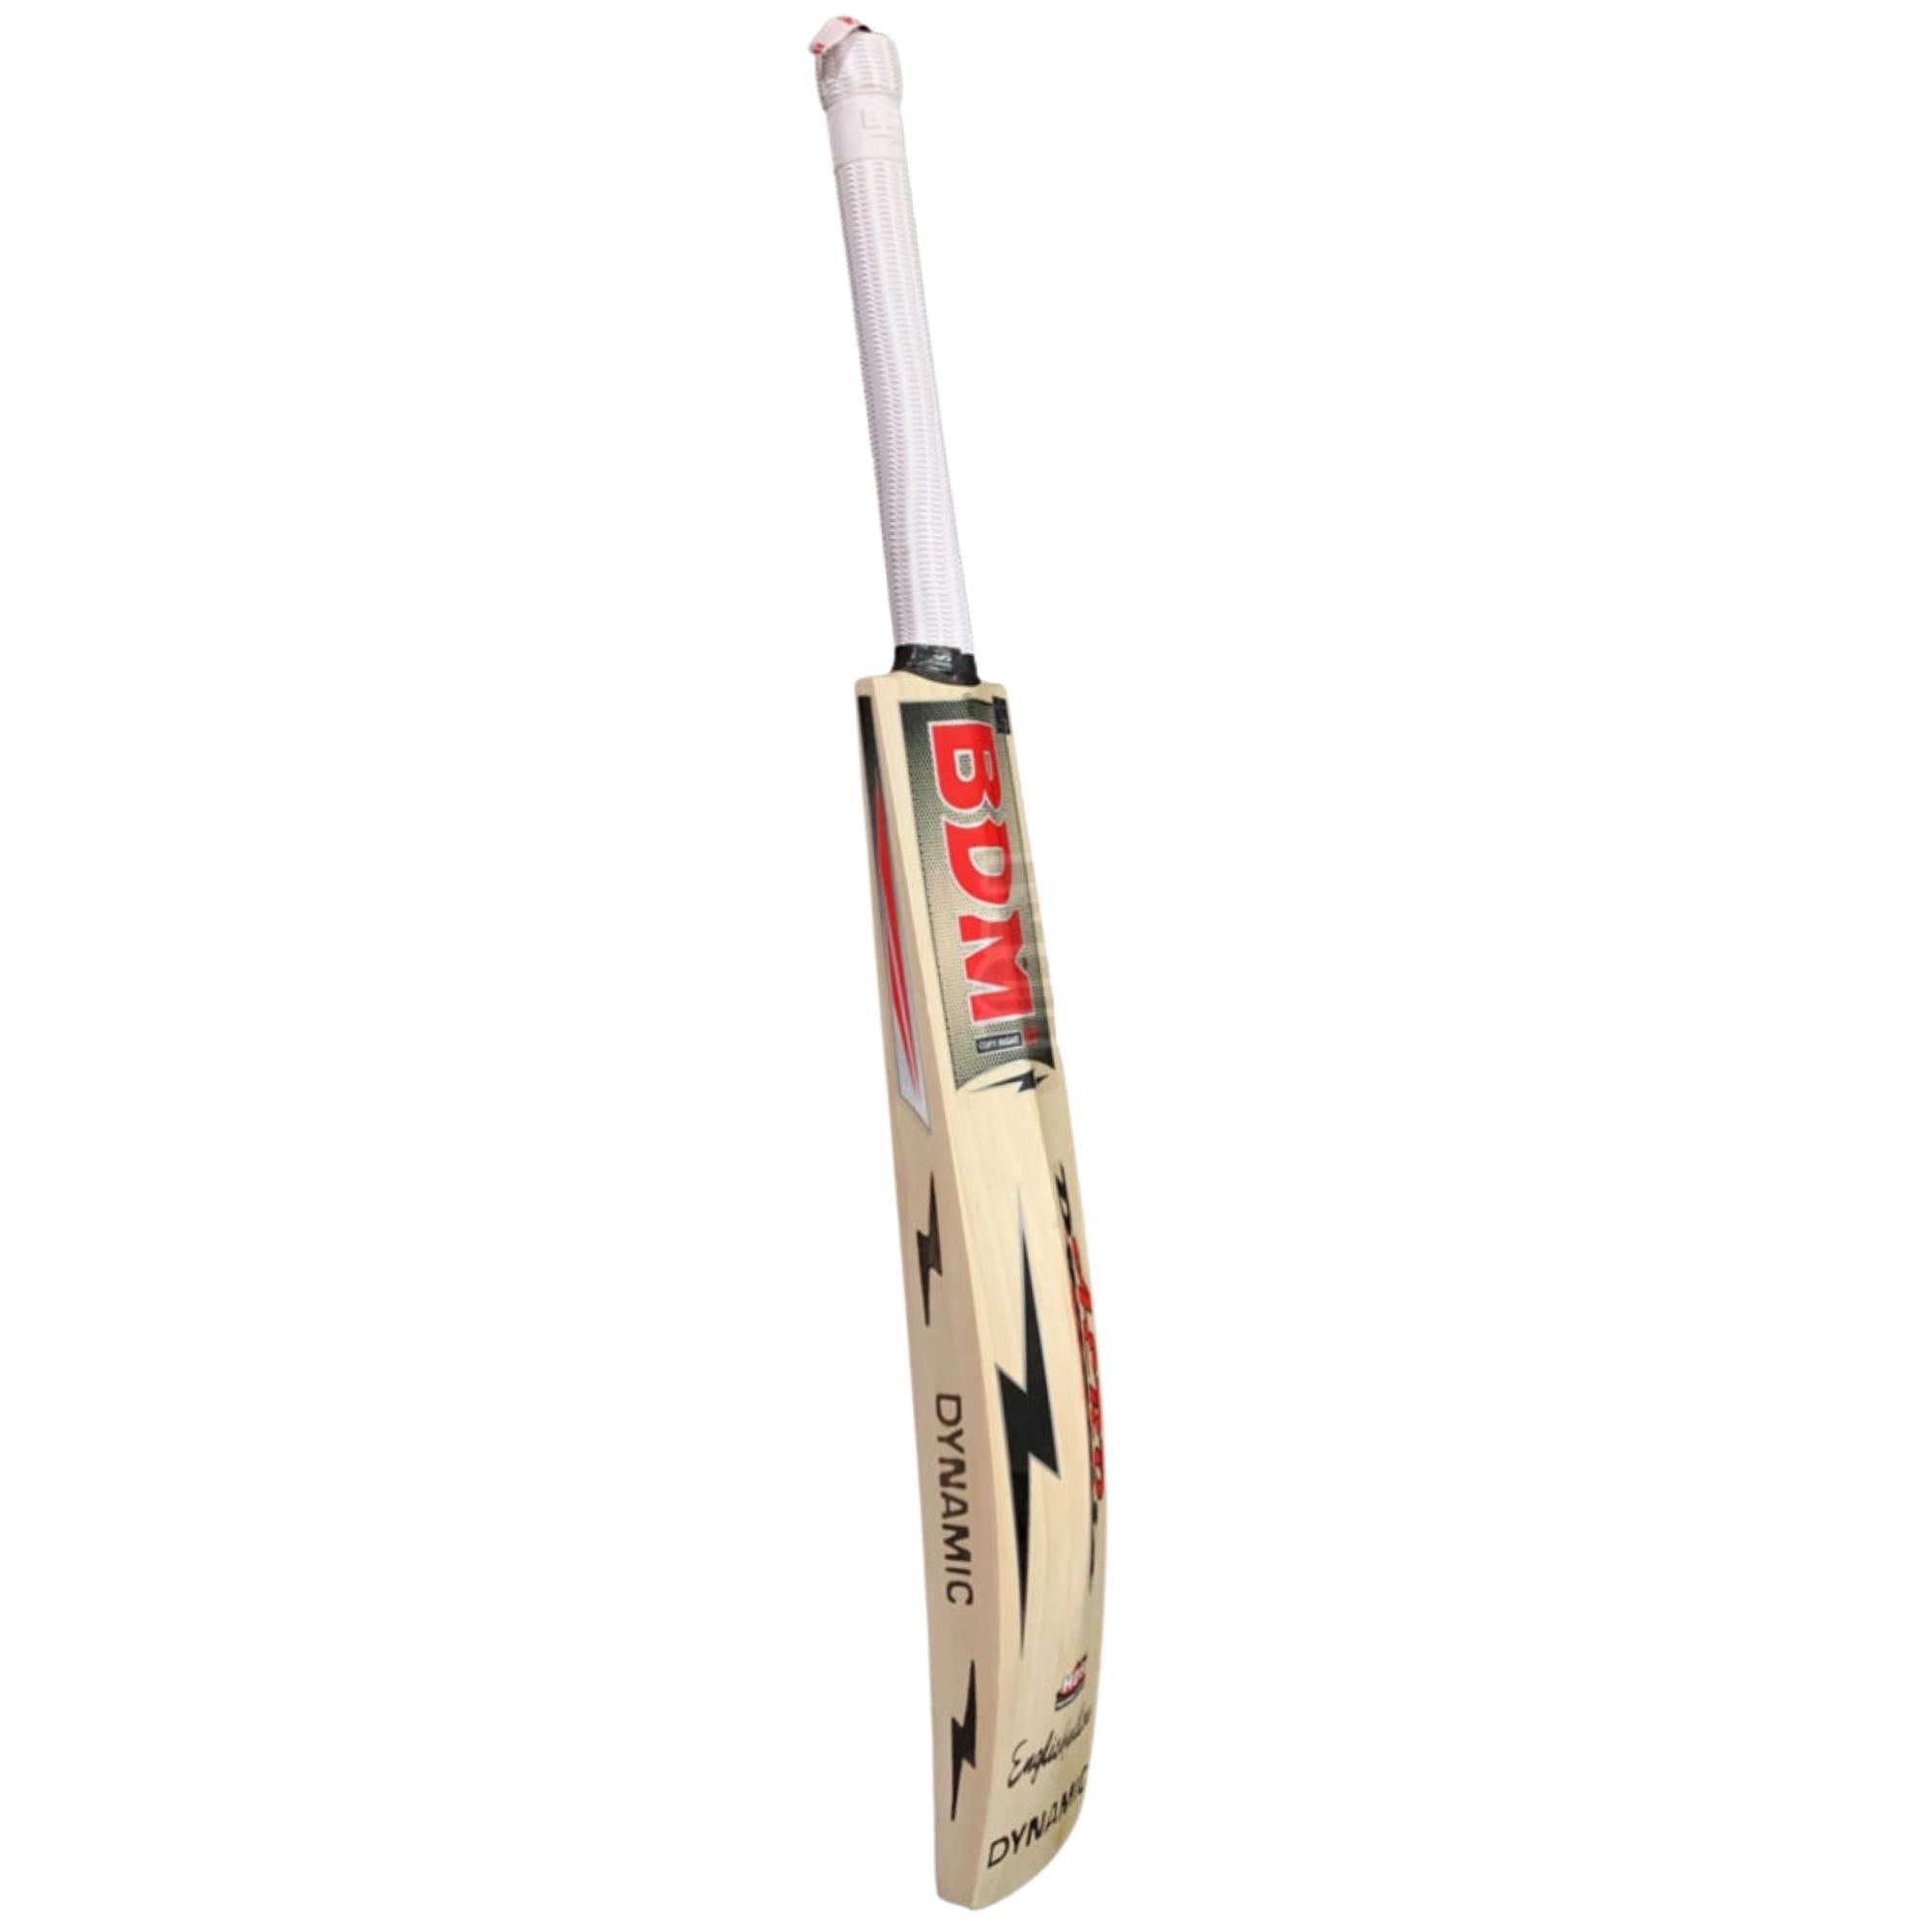 BDM Aero Dynamic Cricket Bat